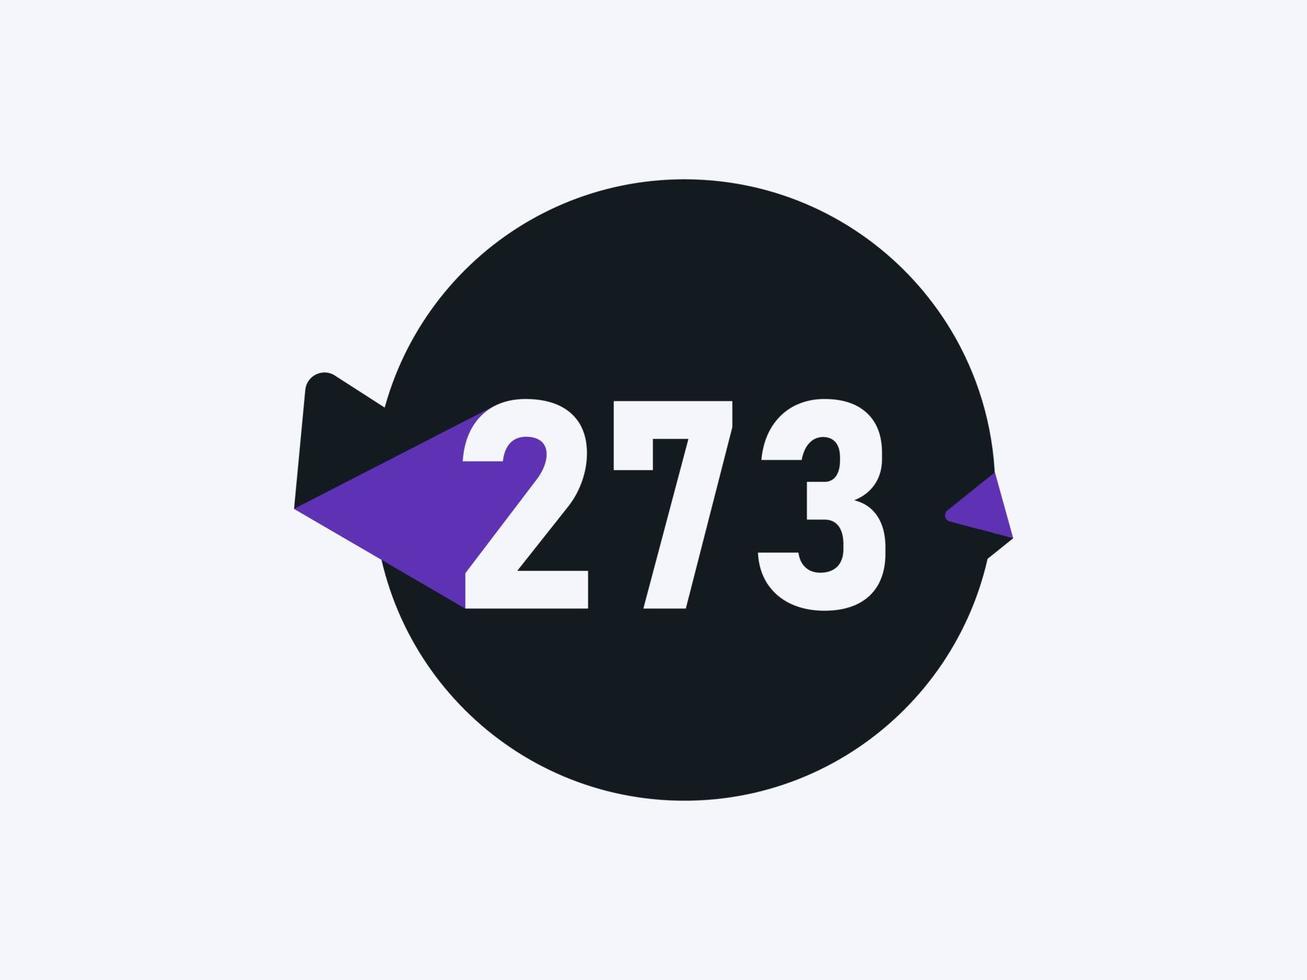 273 Number logo icon design vector image. Number logo icon design vector image